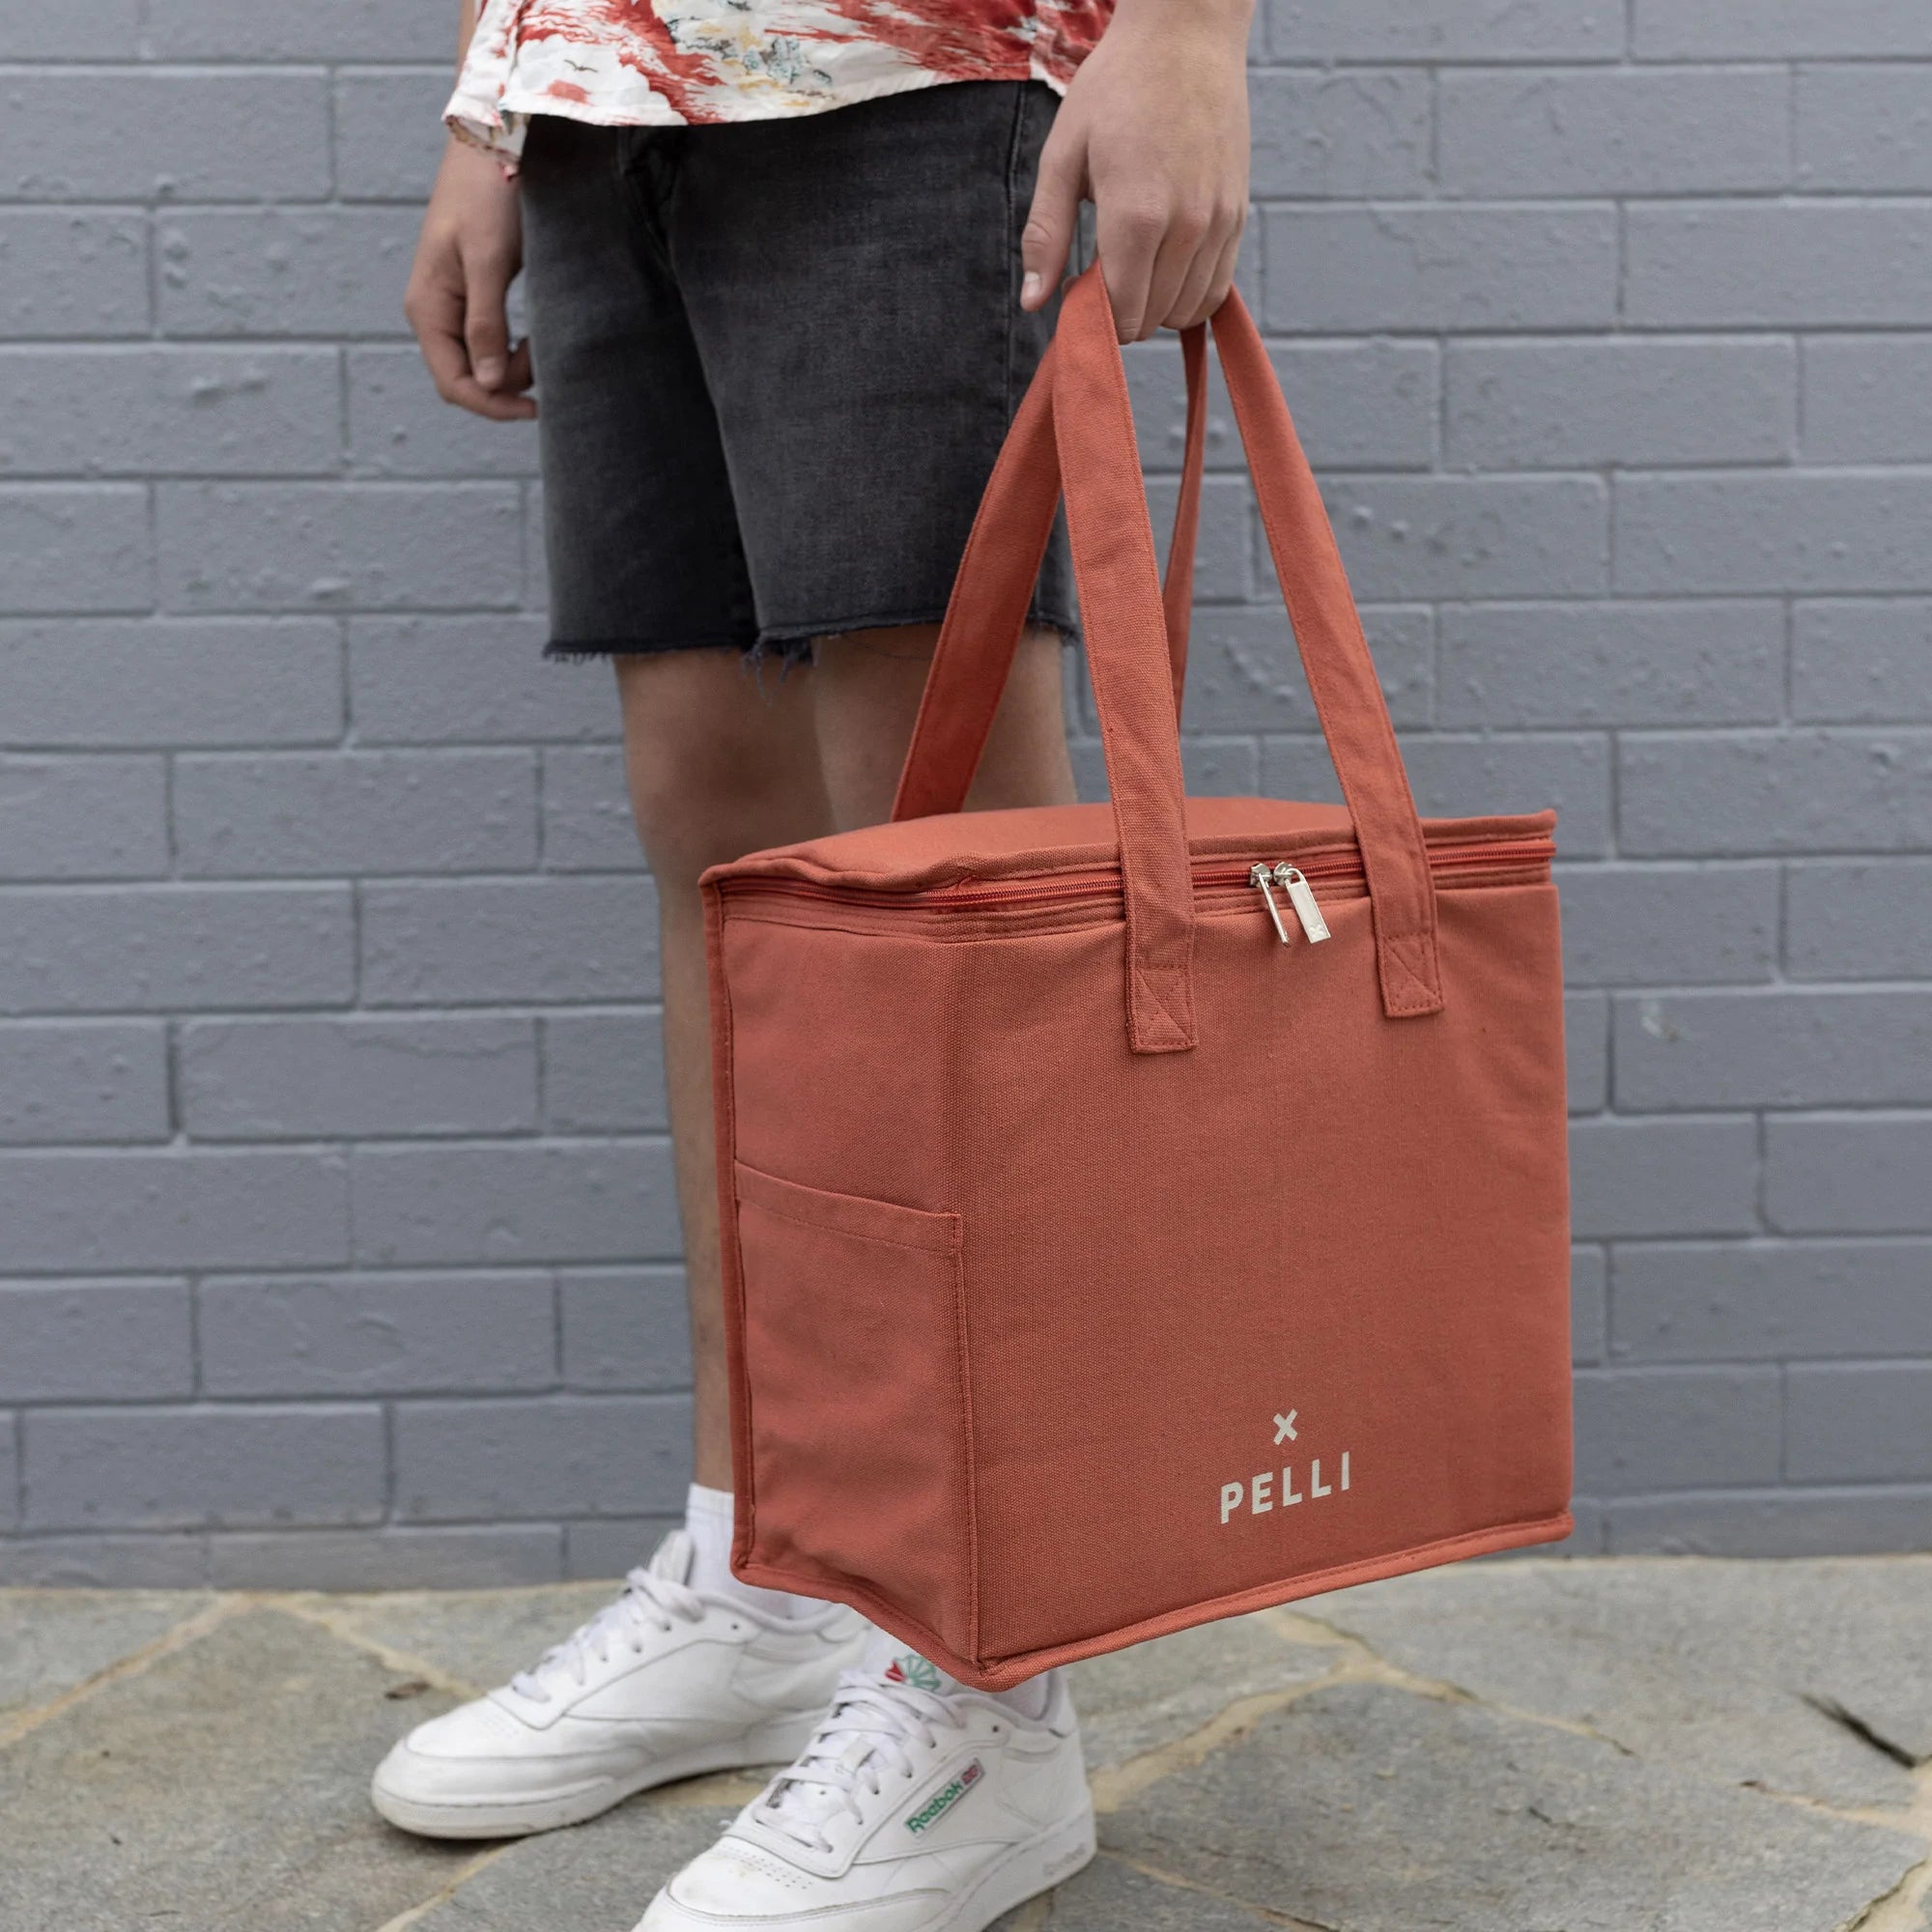 Pelli 'Ok Chill' Medium Cooler Bag Canvas Clay